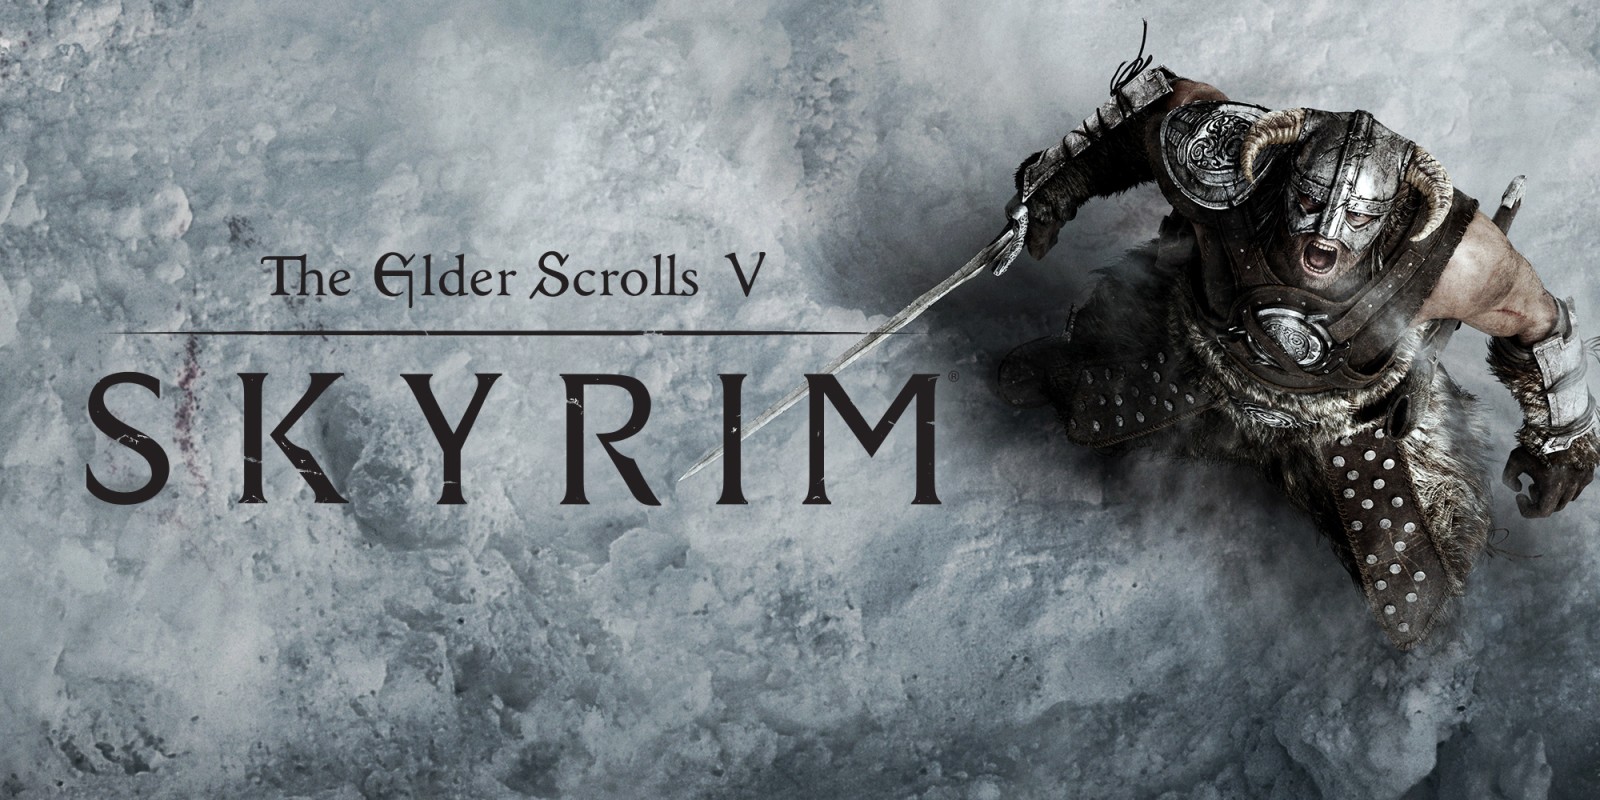 The Elder Scrolls V: Skyrim PS5 Version Full Game Free Download